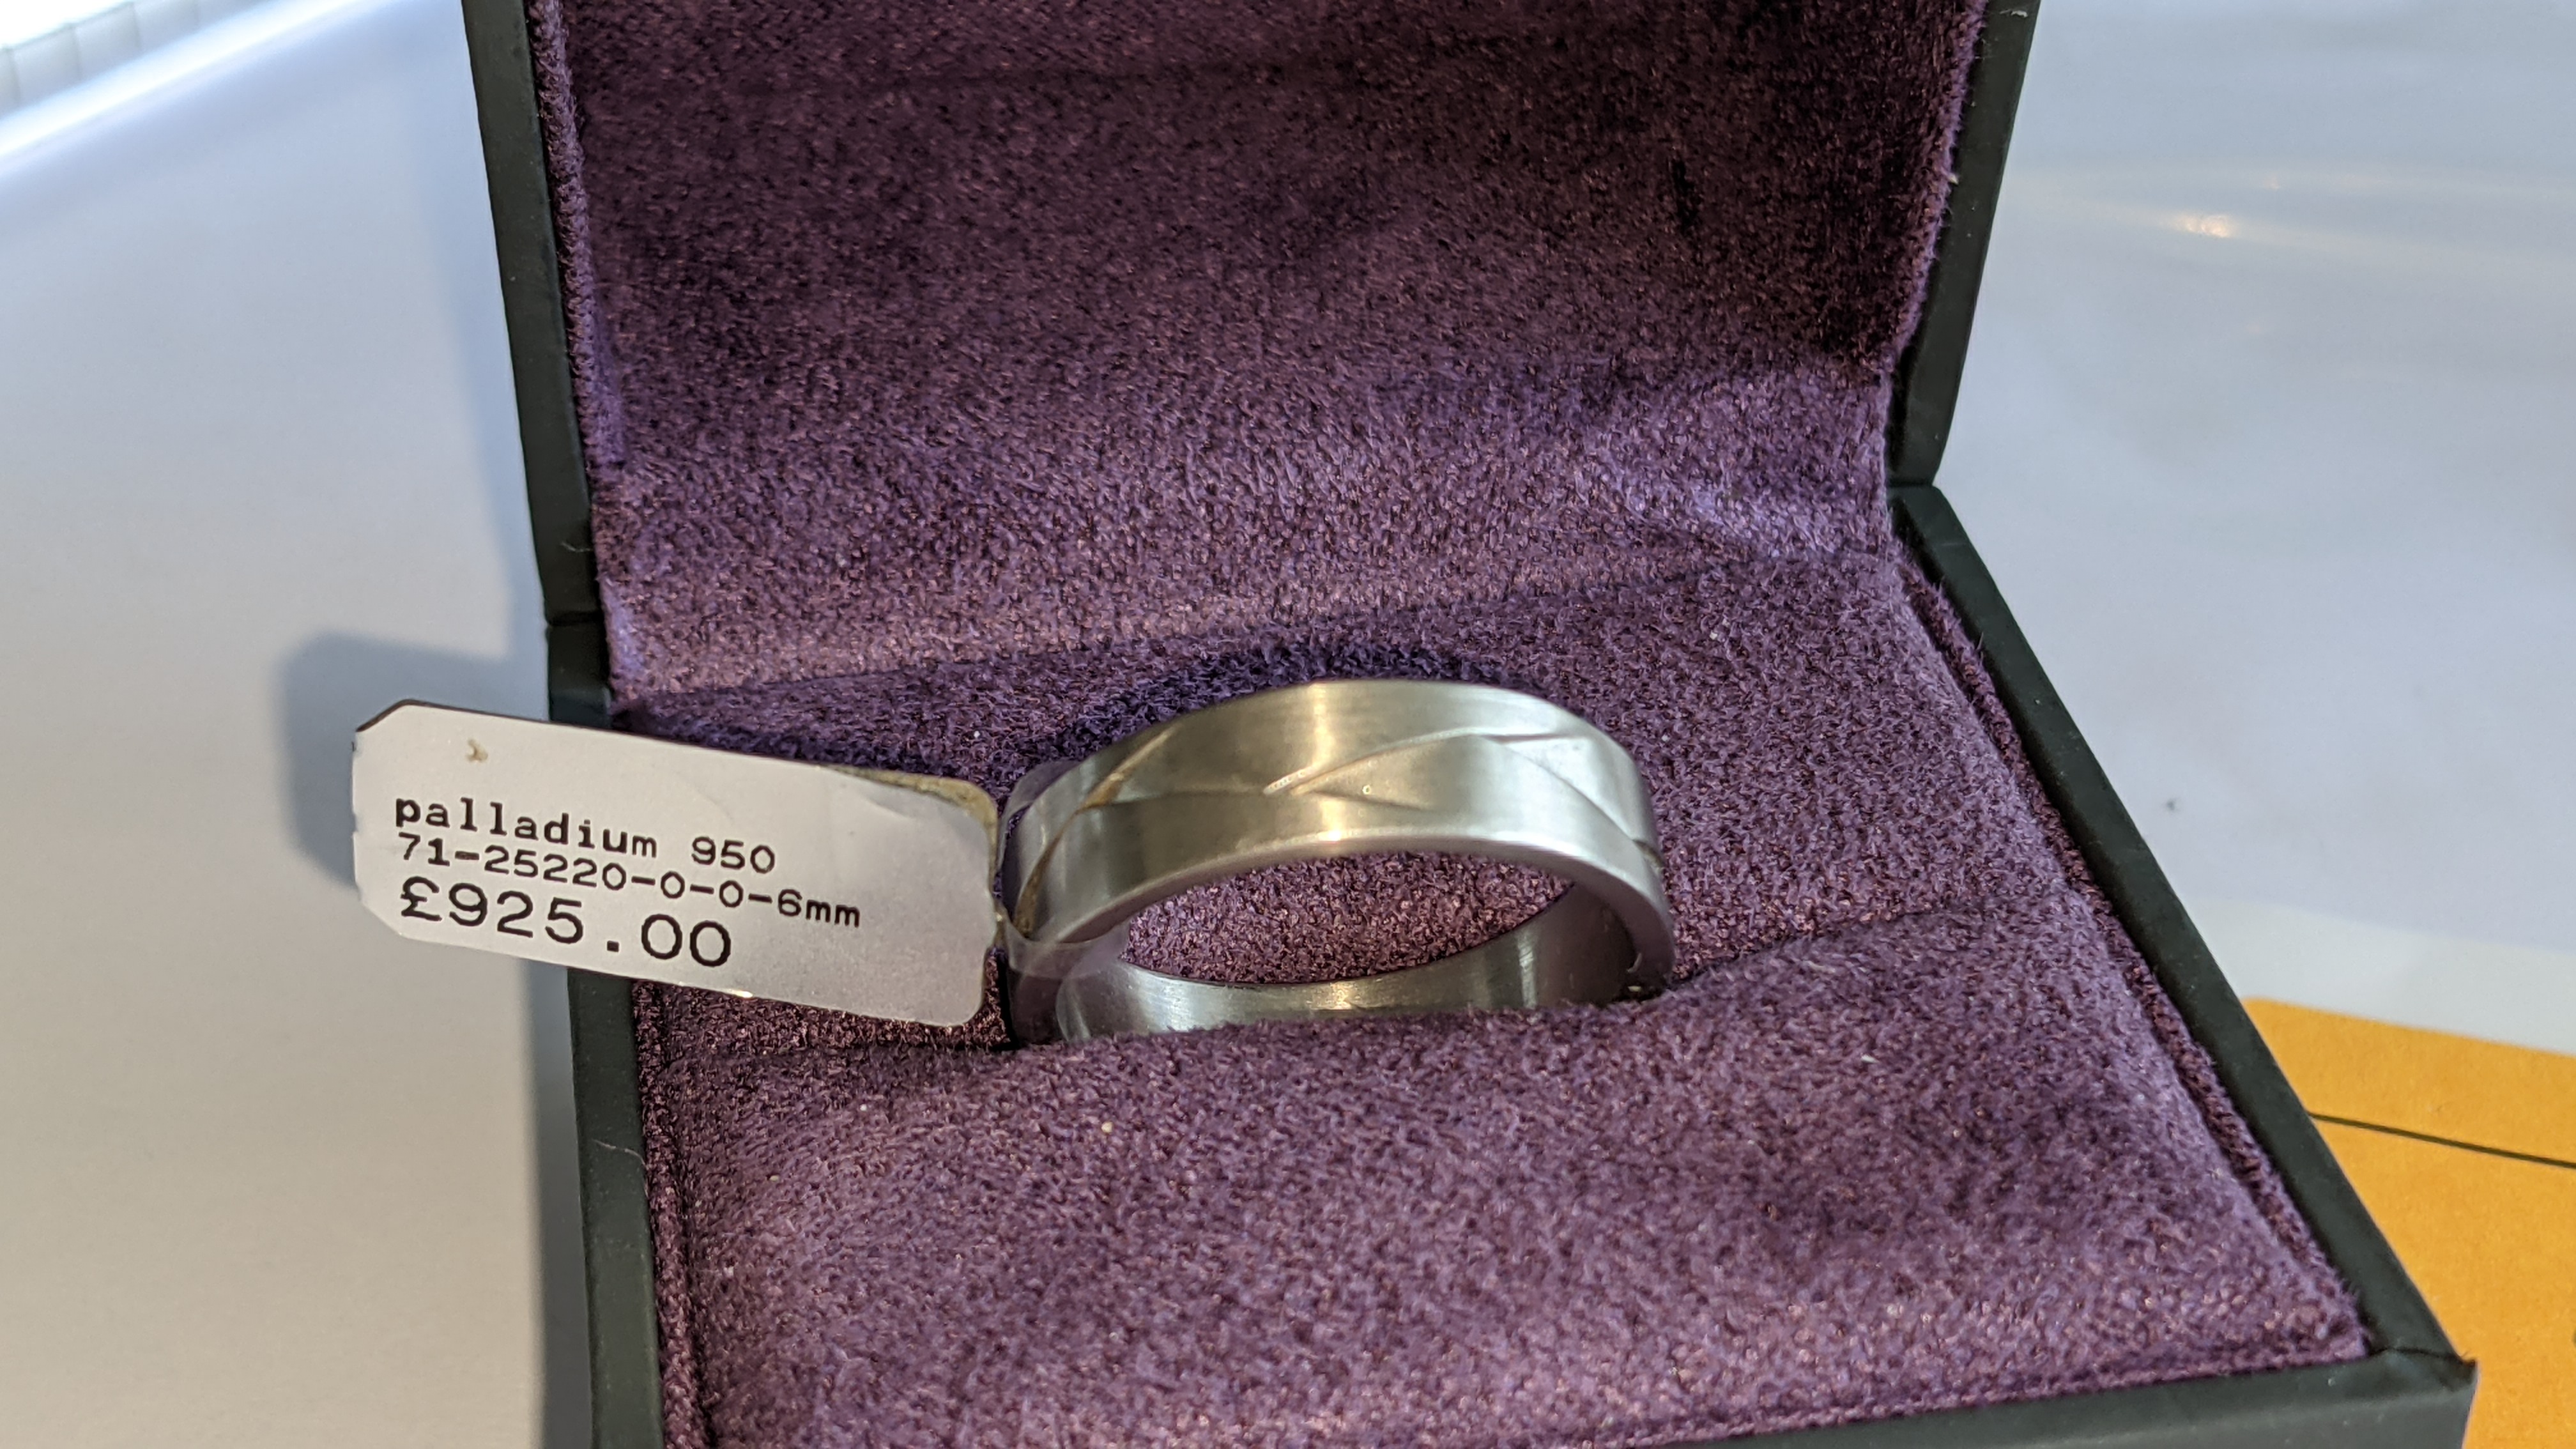 Palladium 950 6mm woven ring. RRP £925 - Image 3 of 14